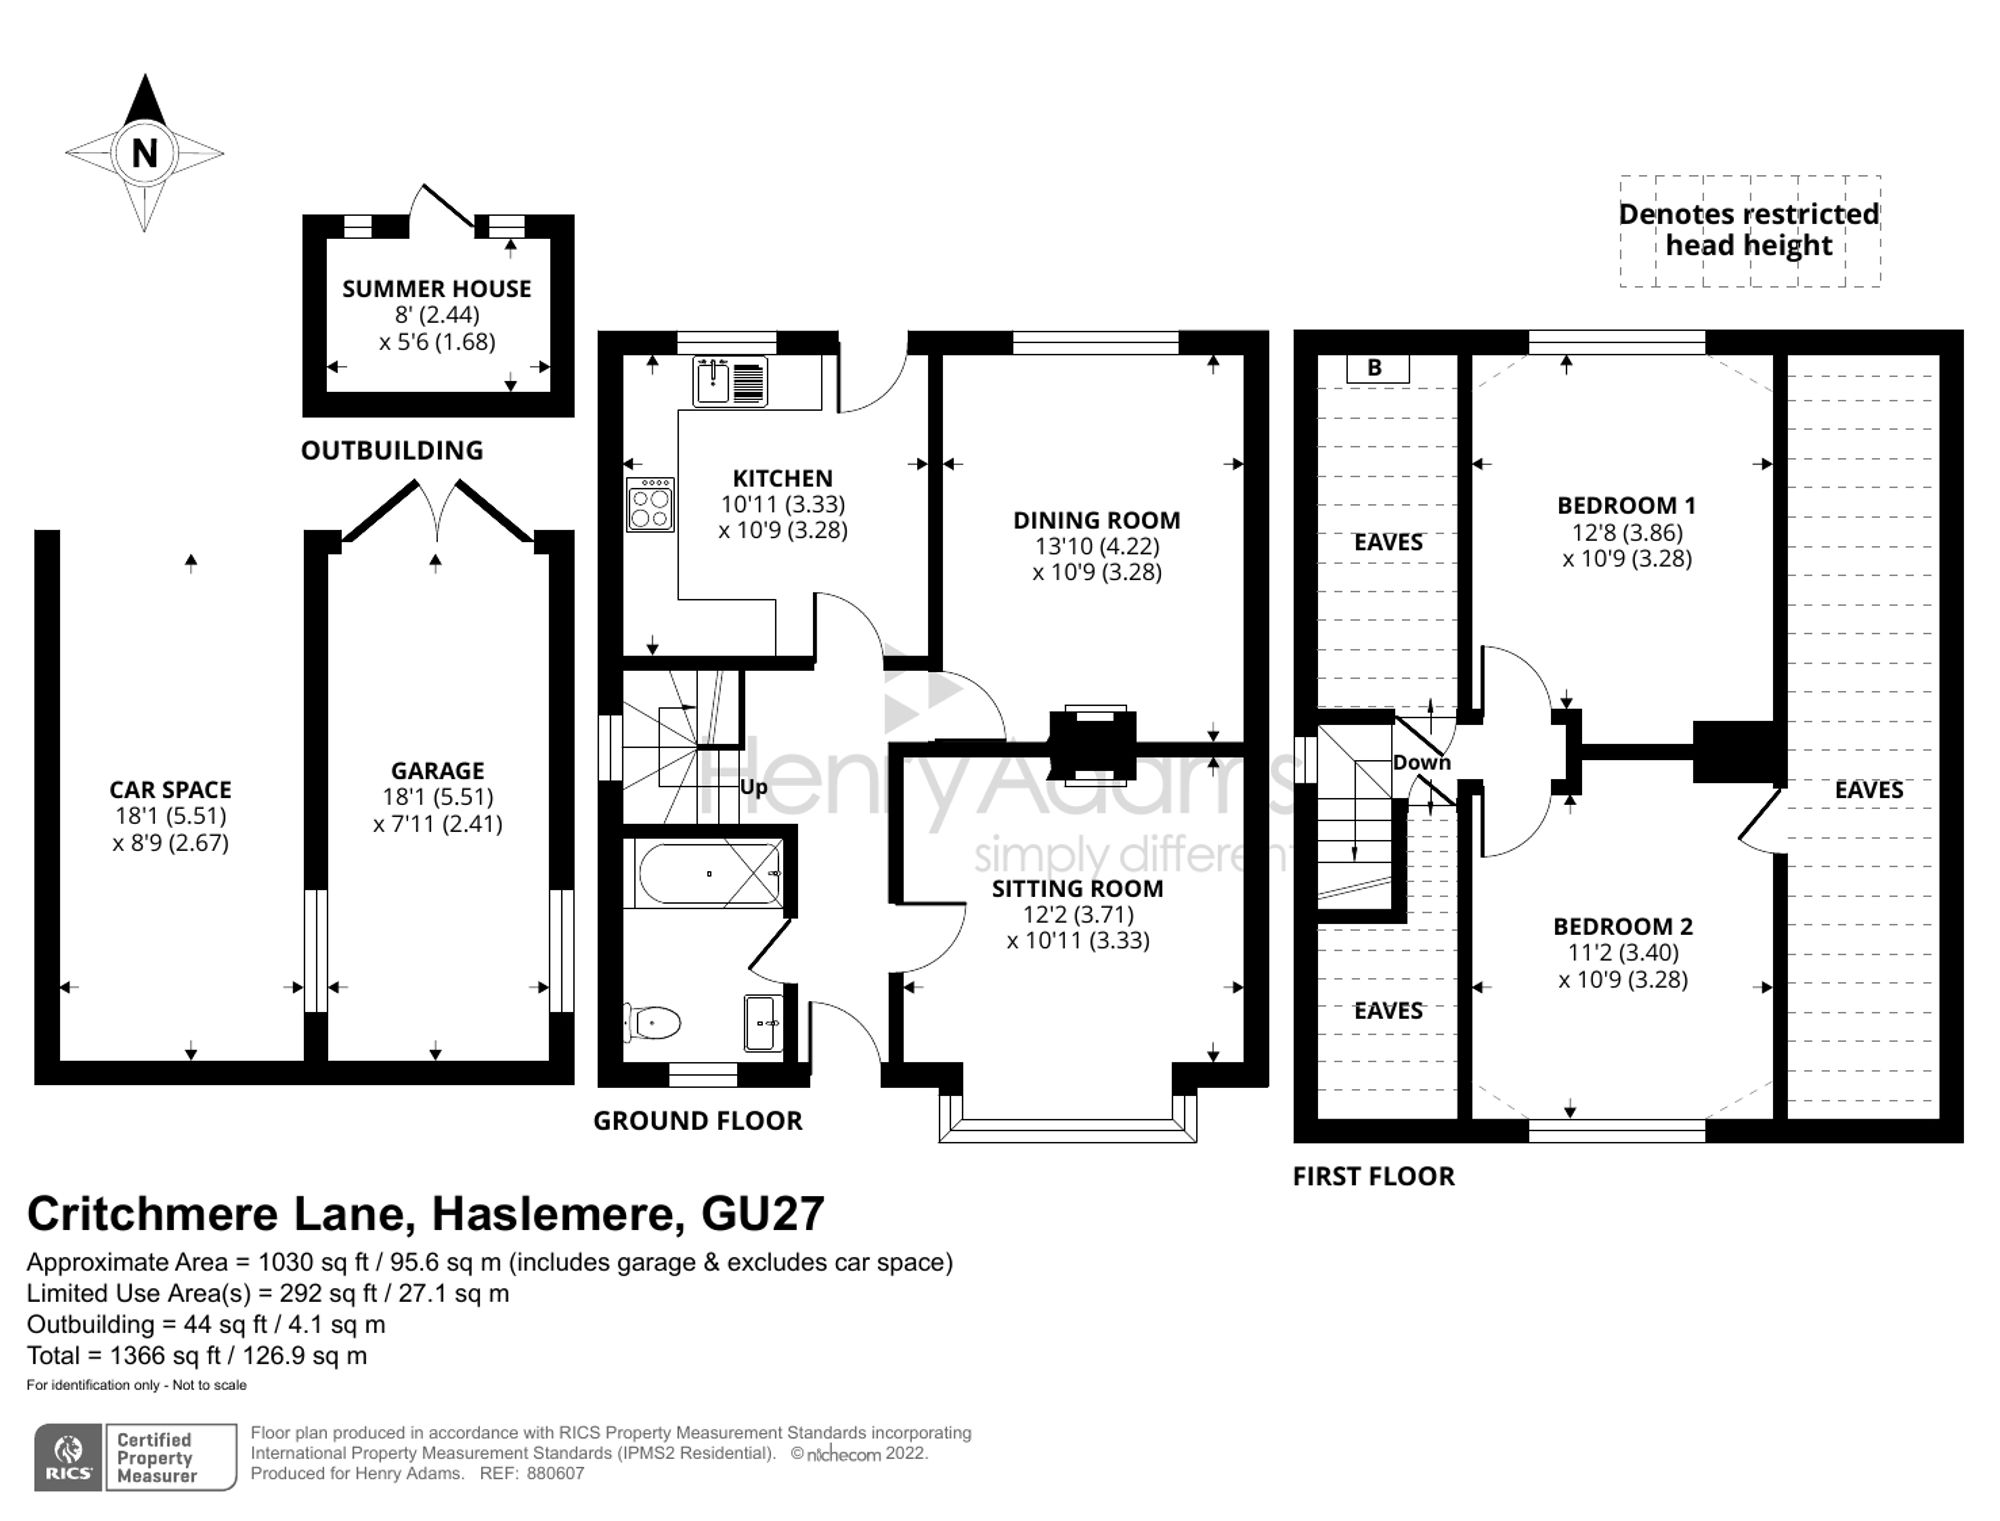 Critchmere Lane, Haslemere, GU27 floorplans